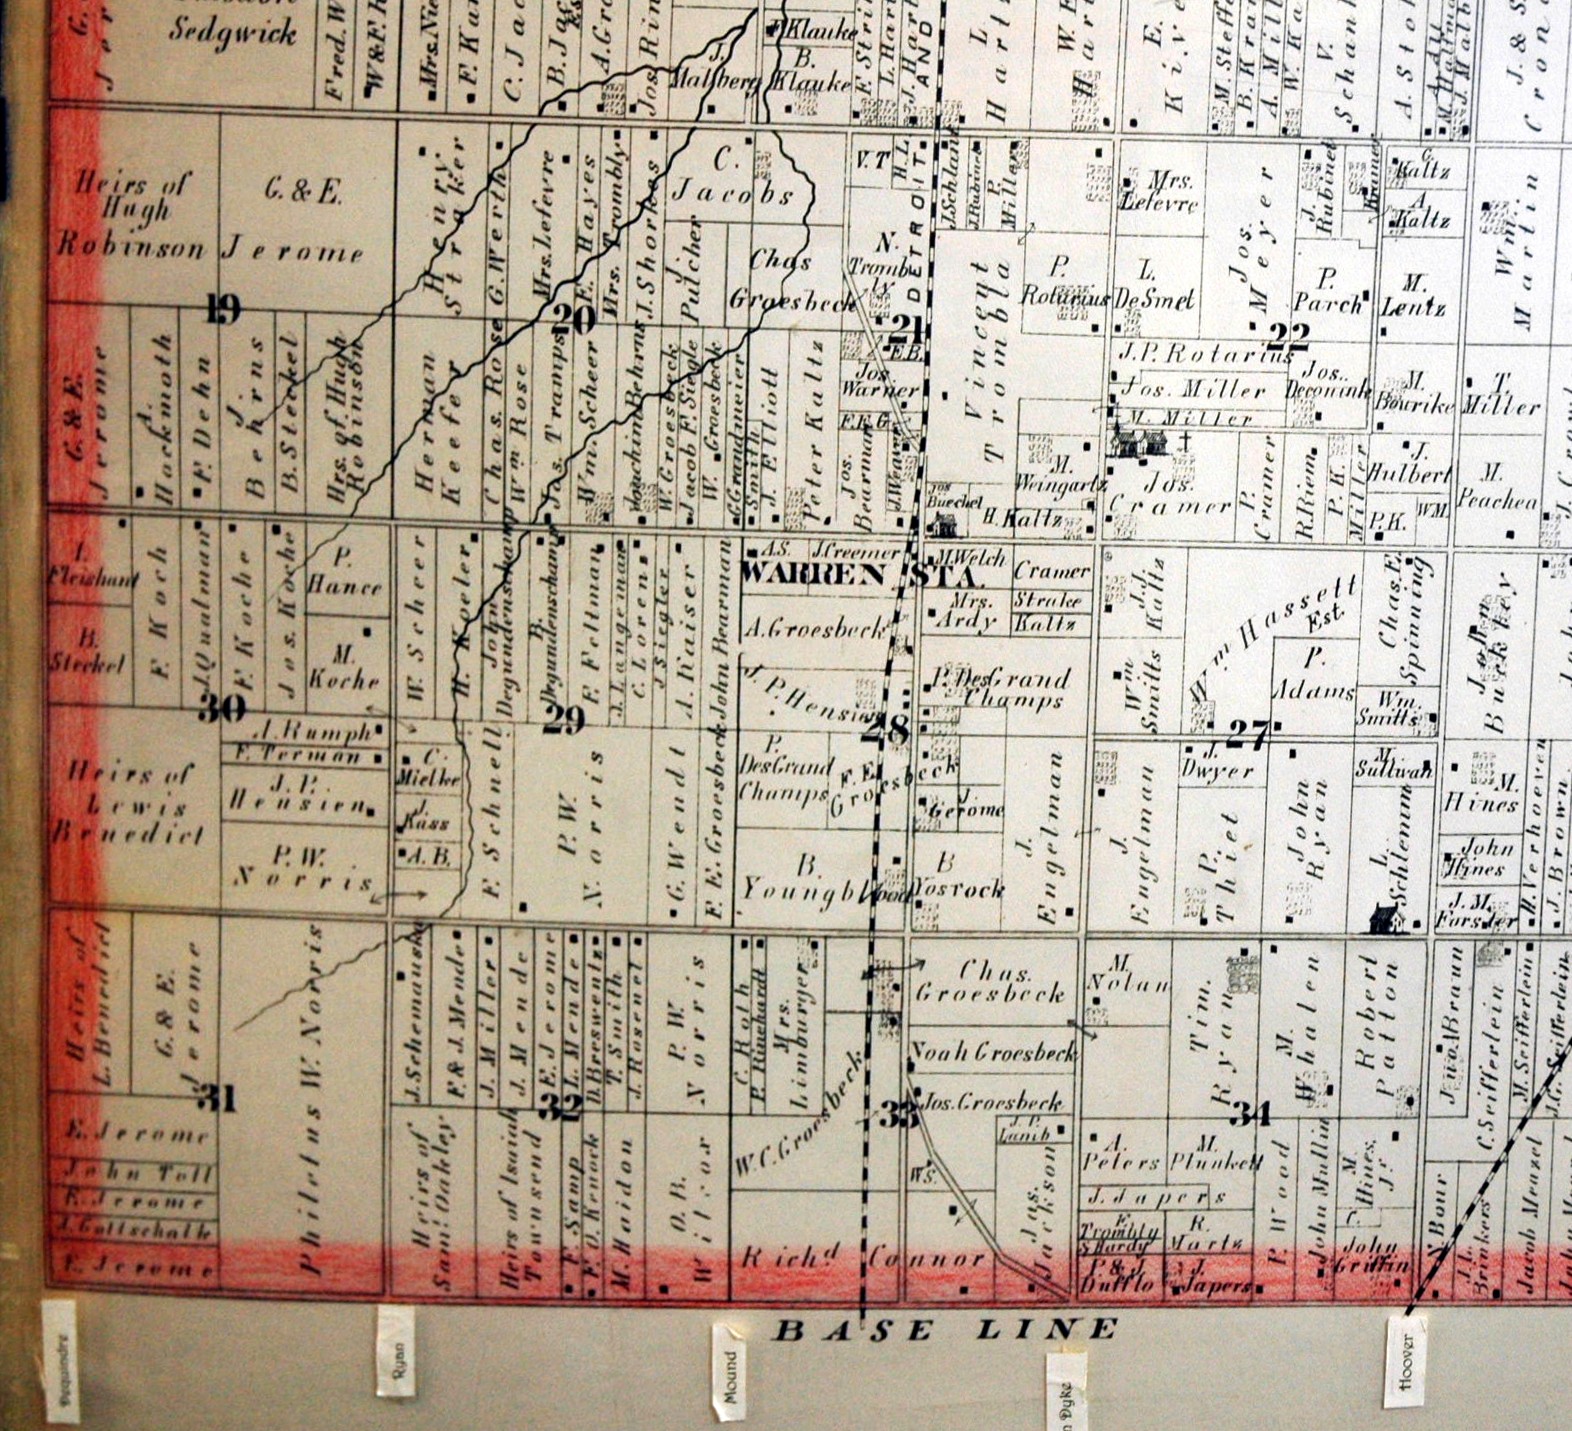 Romeo Village, Bruce & Washington, Michigan 1859 Old Town Map Custom Print  - Macomb Co. - OLD MAPS